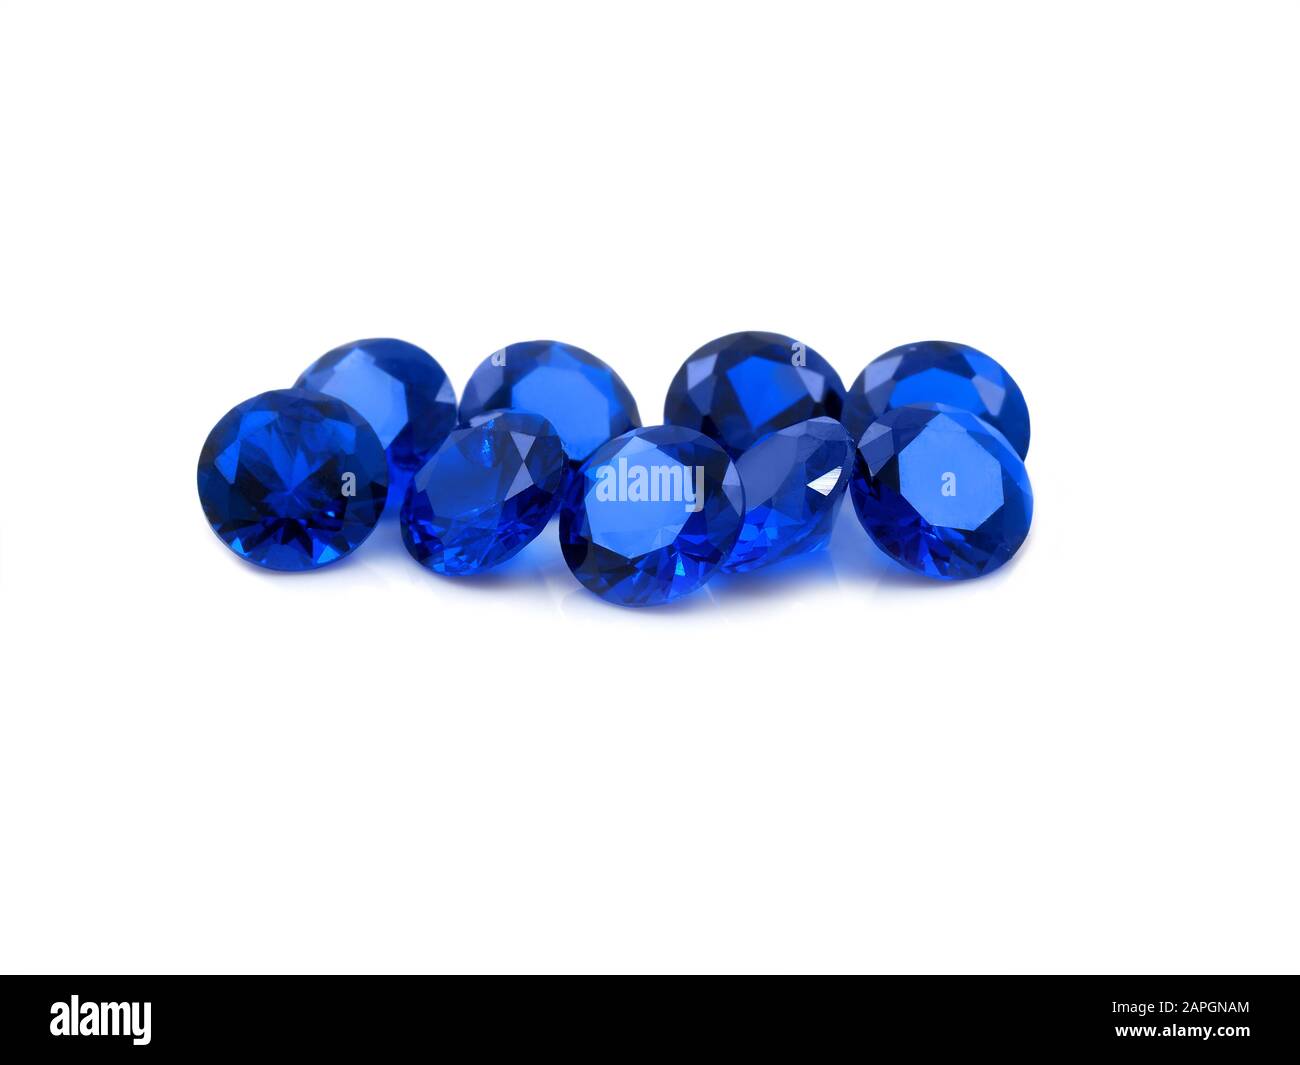 Blue dimond cut sapphires on a white background. Nine deep blue faceted sapphires on a white background. Stock Photo